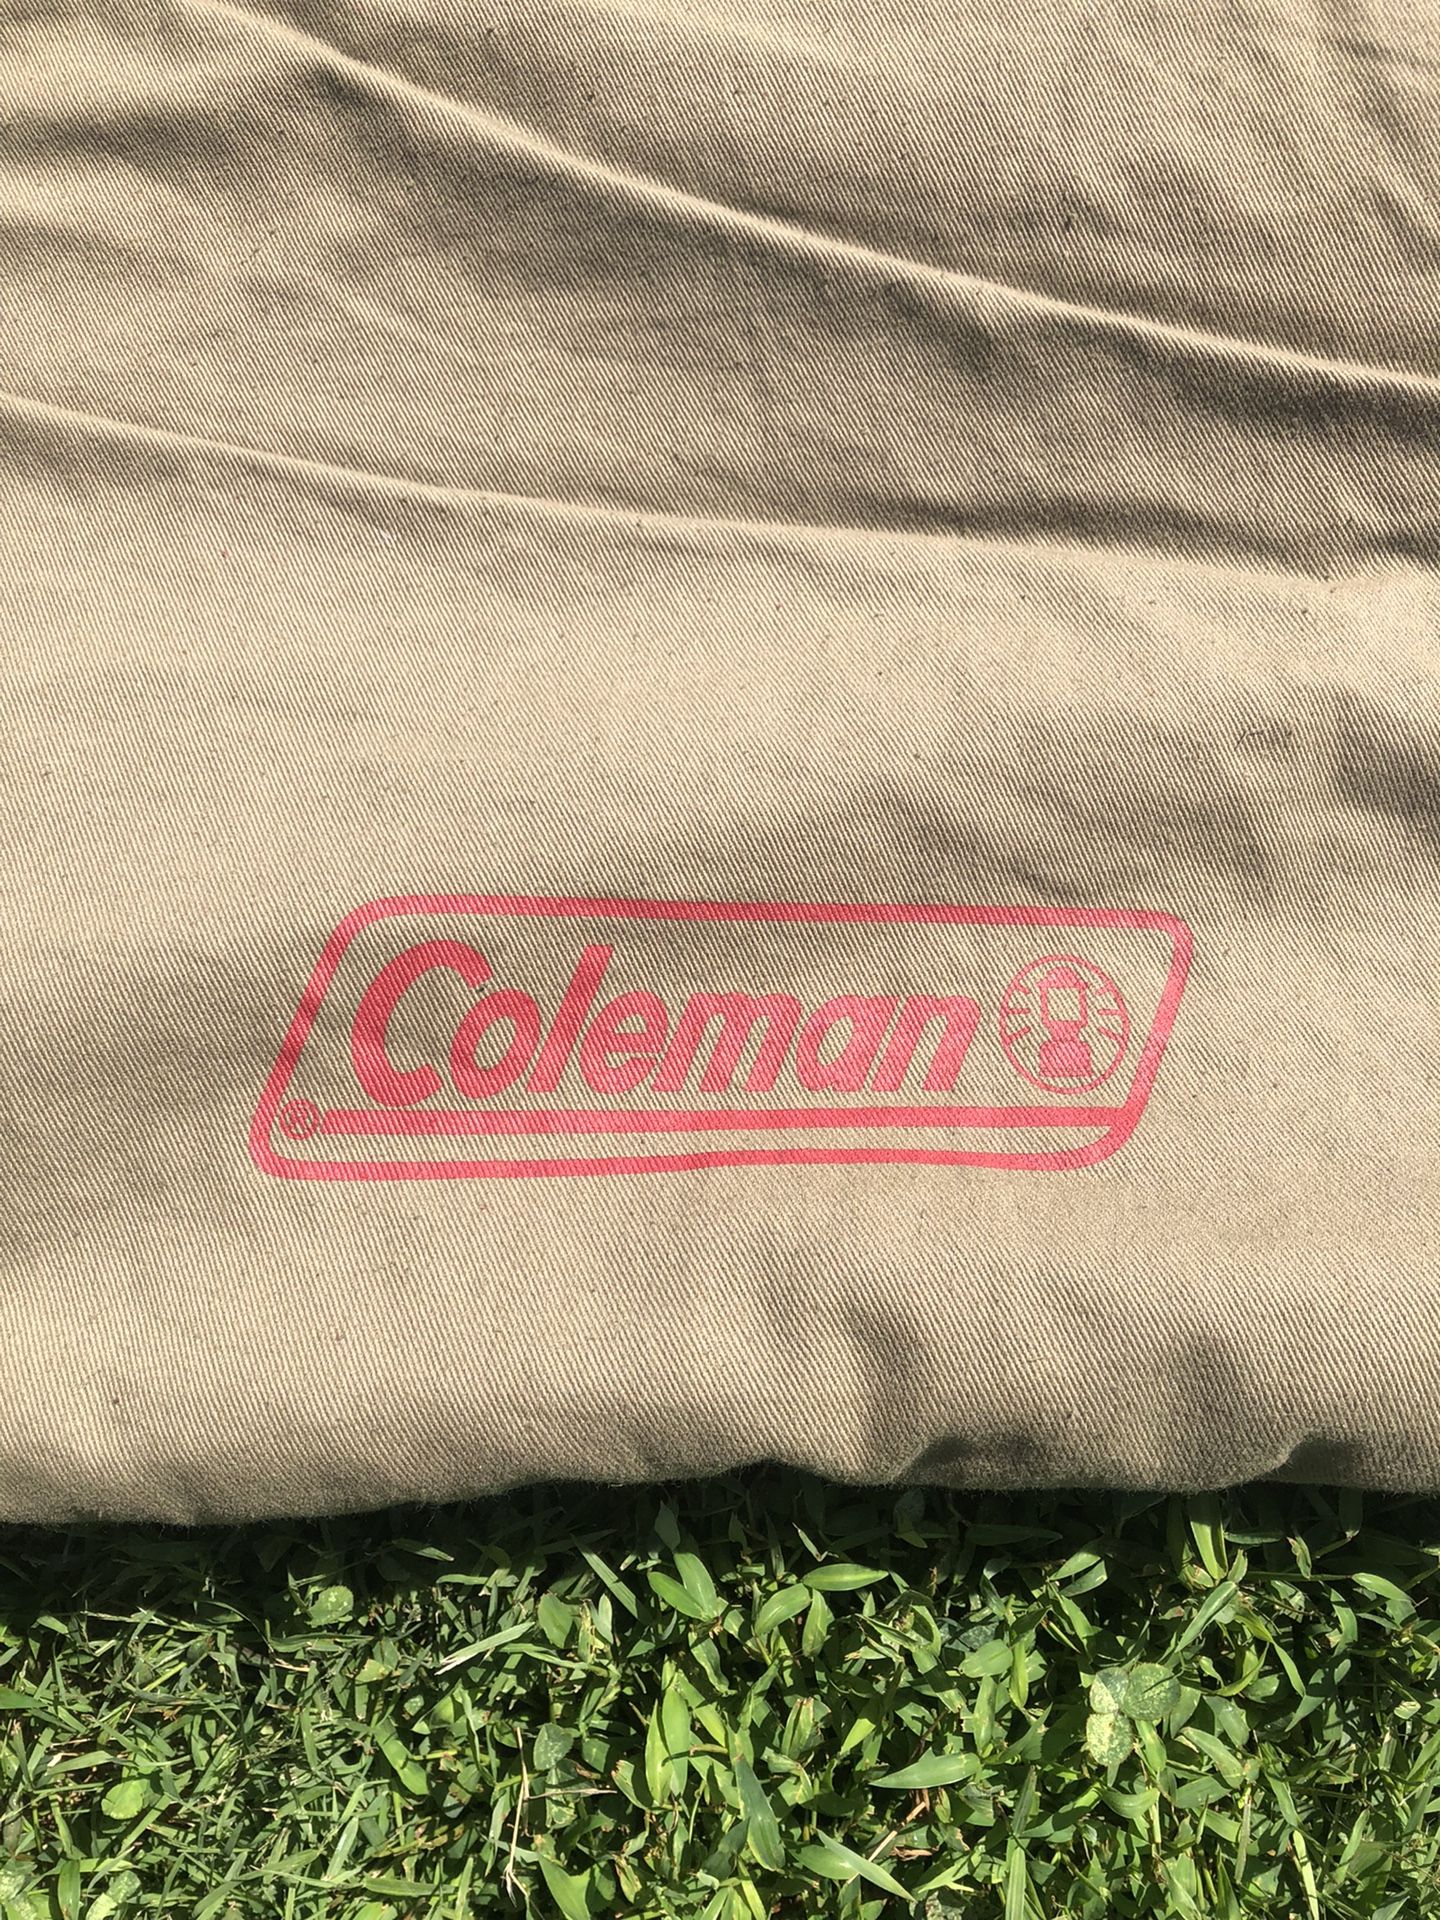 Large Coleman sleeping bag